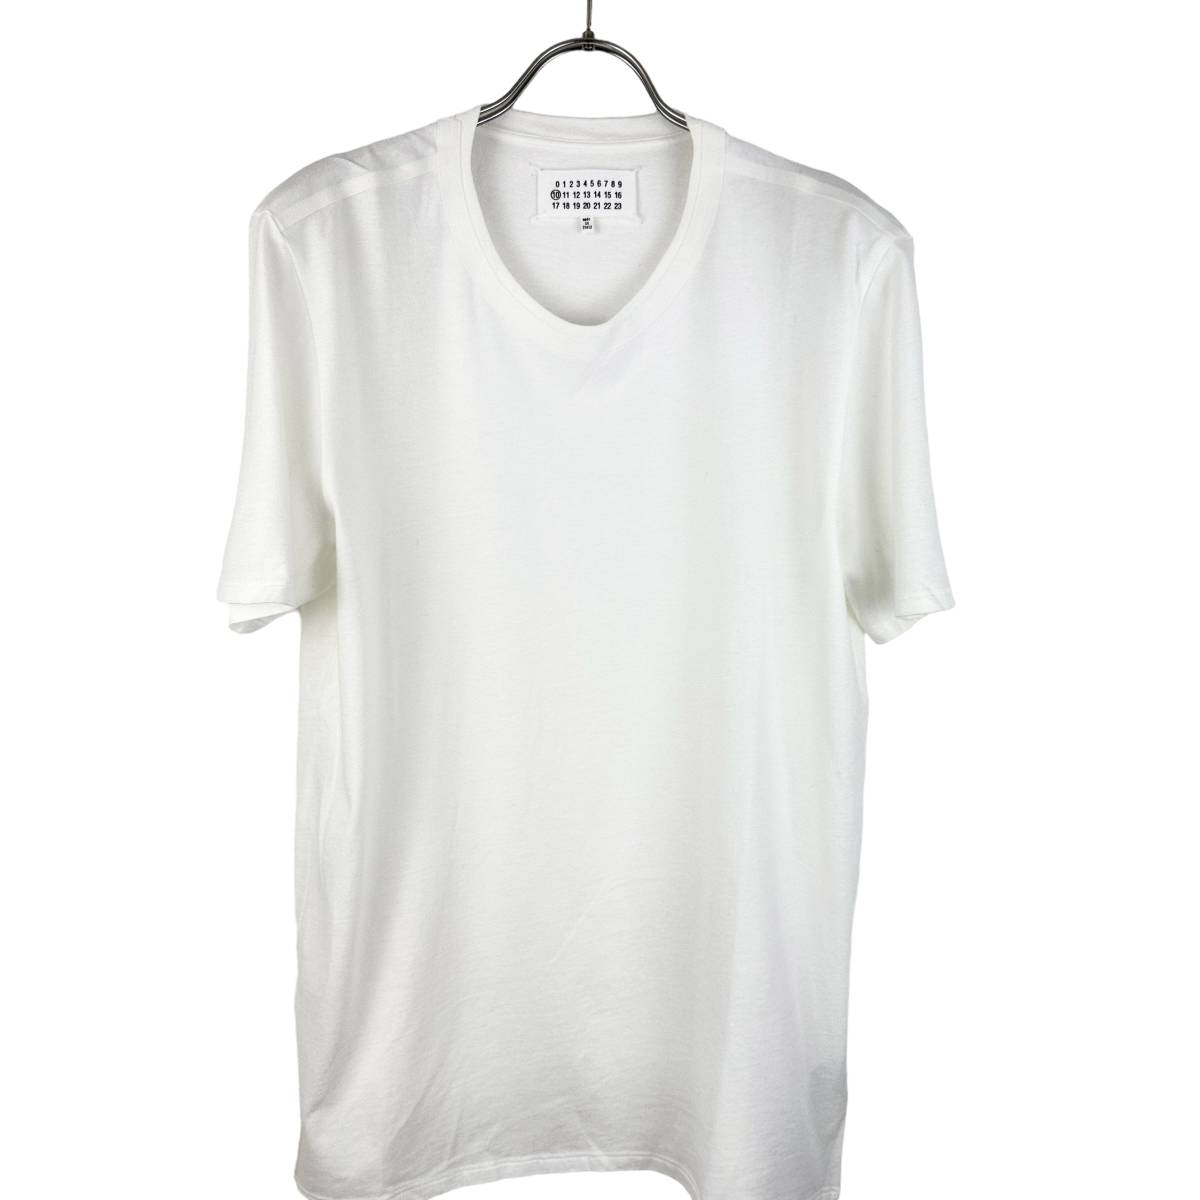 Maison Margiela (メゾン マルジェラ) Plain T Shirt 2012SS (white)